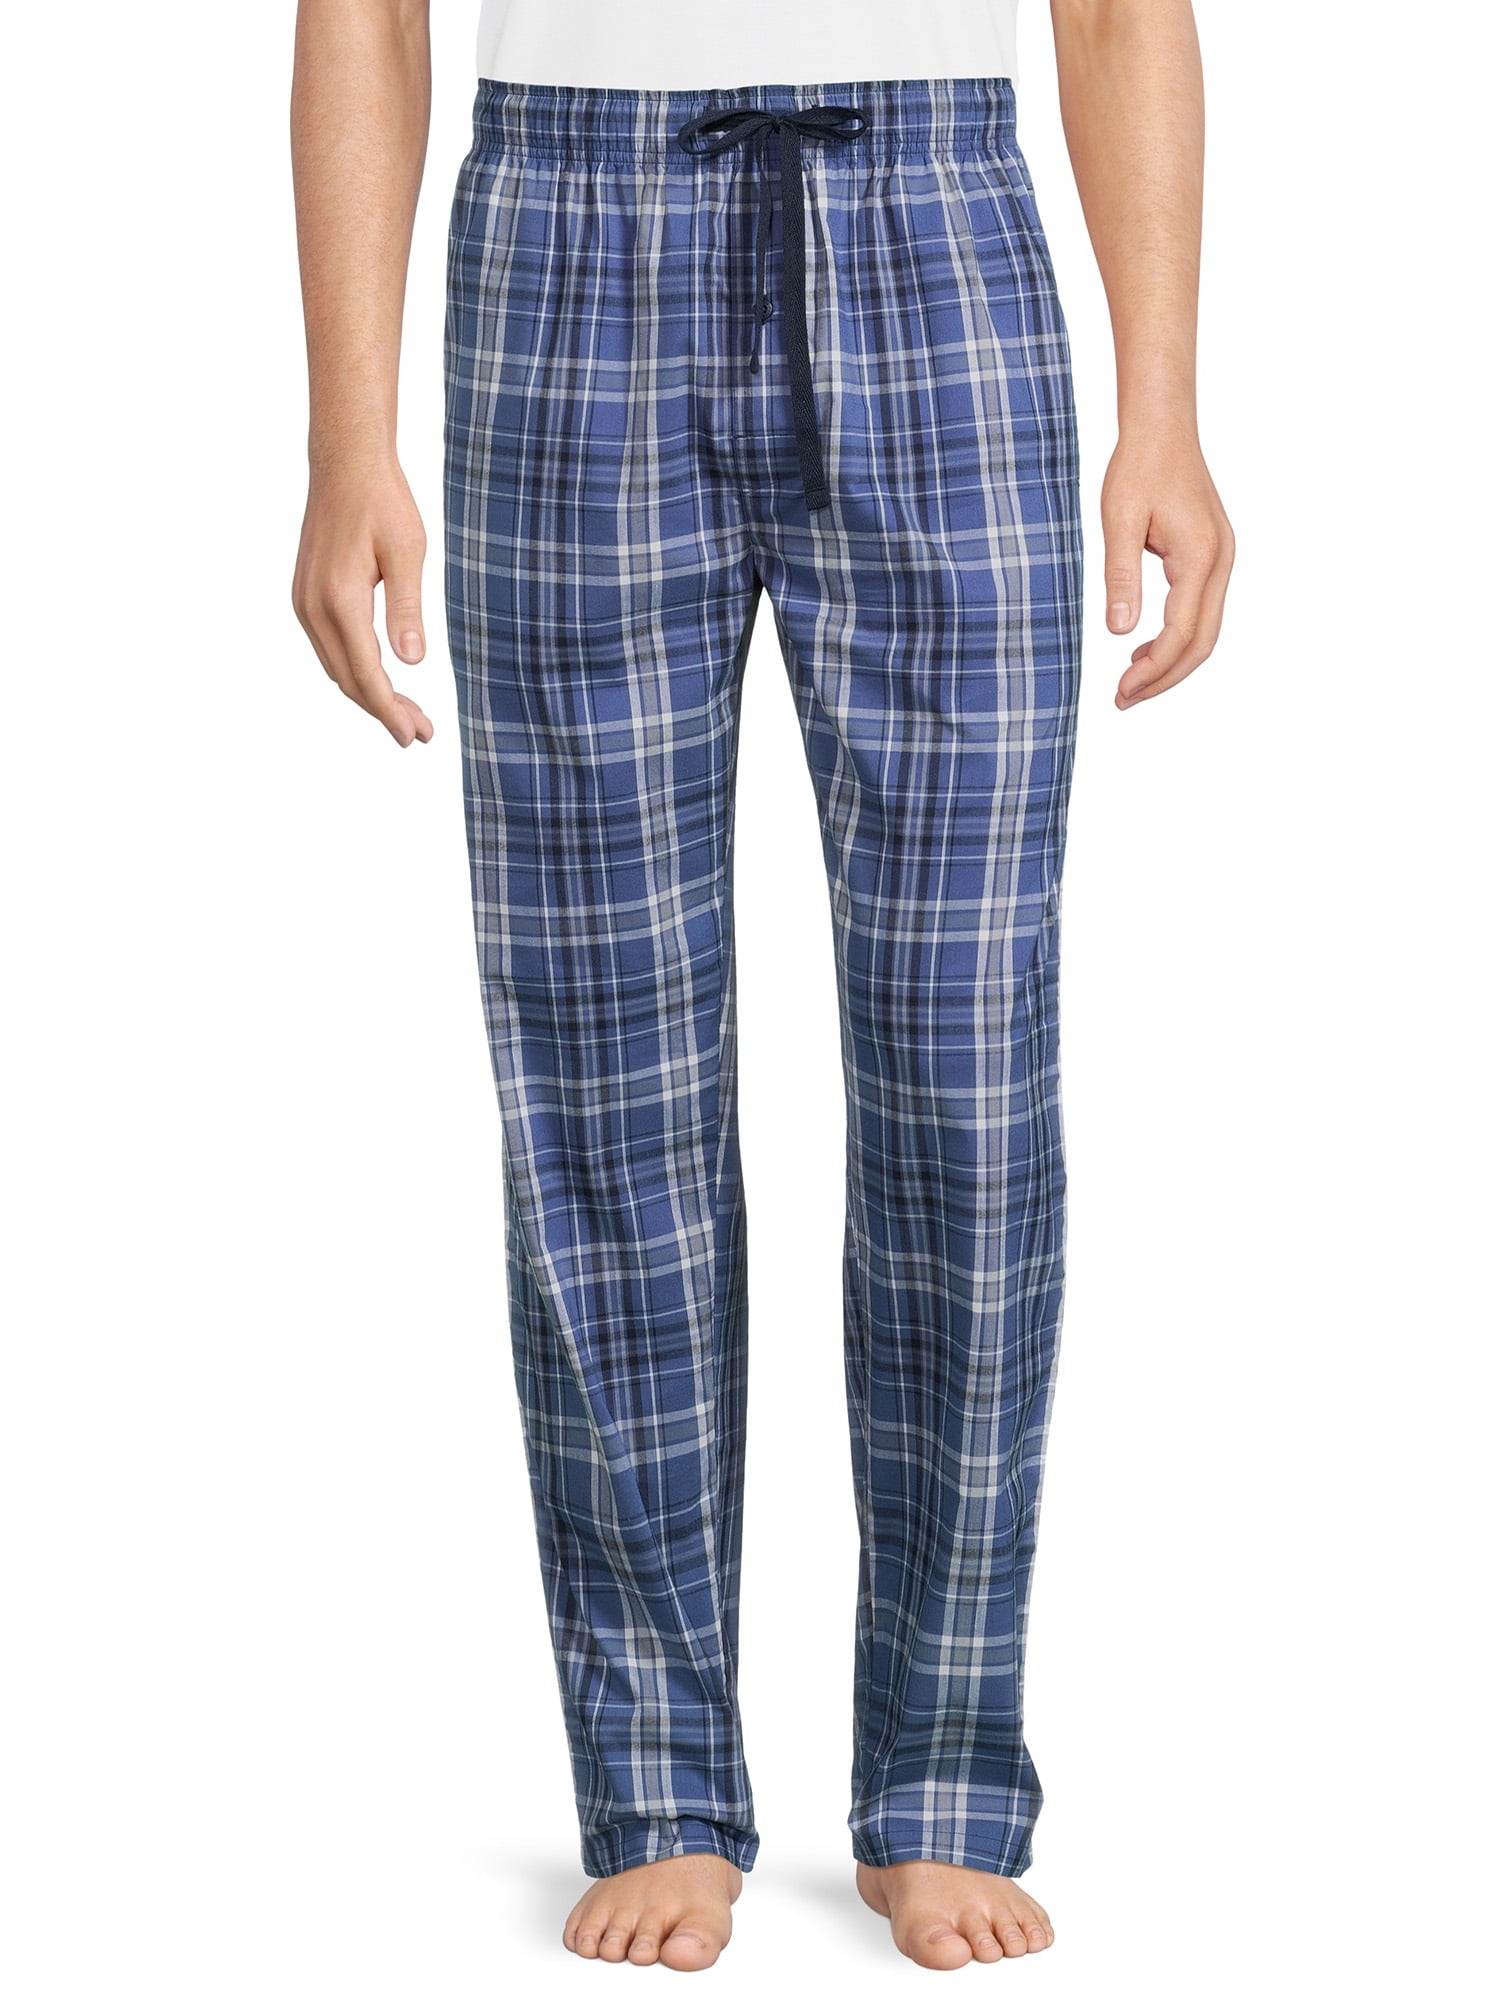 Hanes Men's Woven Sleep Pants, Size S-2XL 